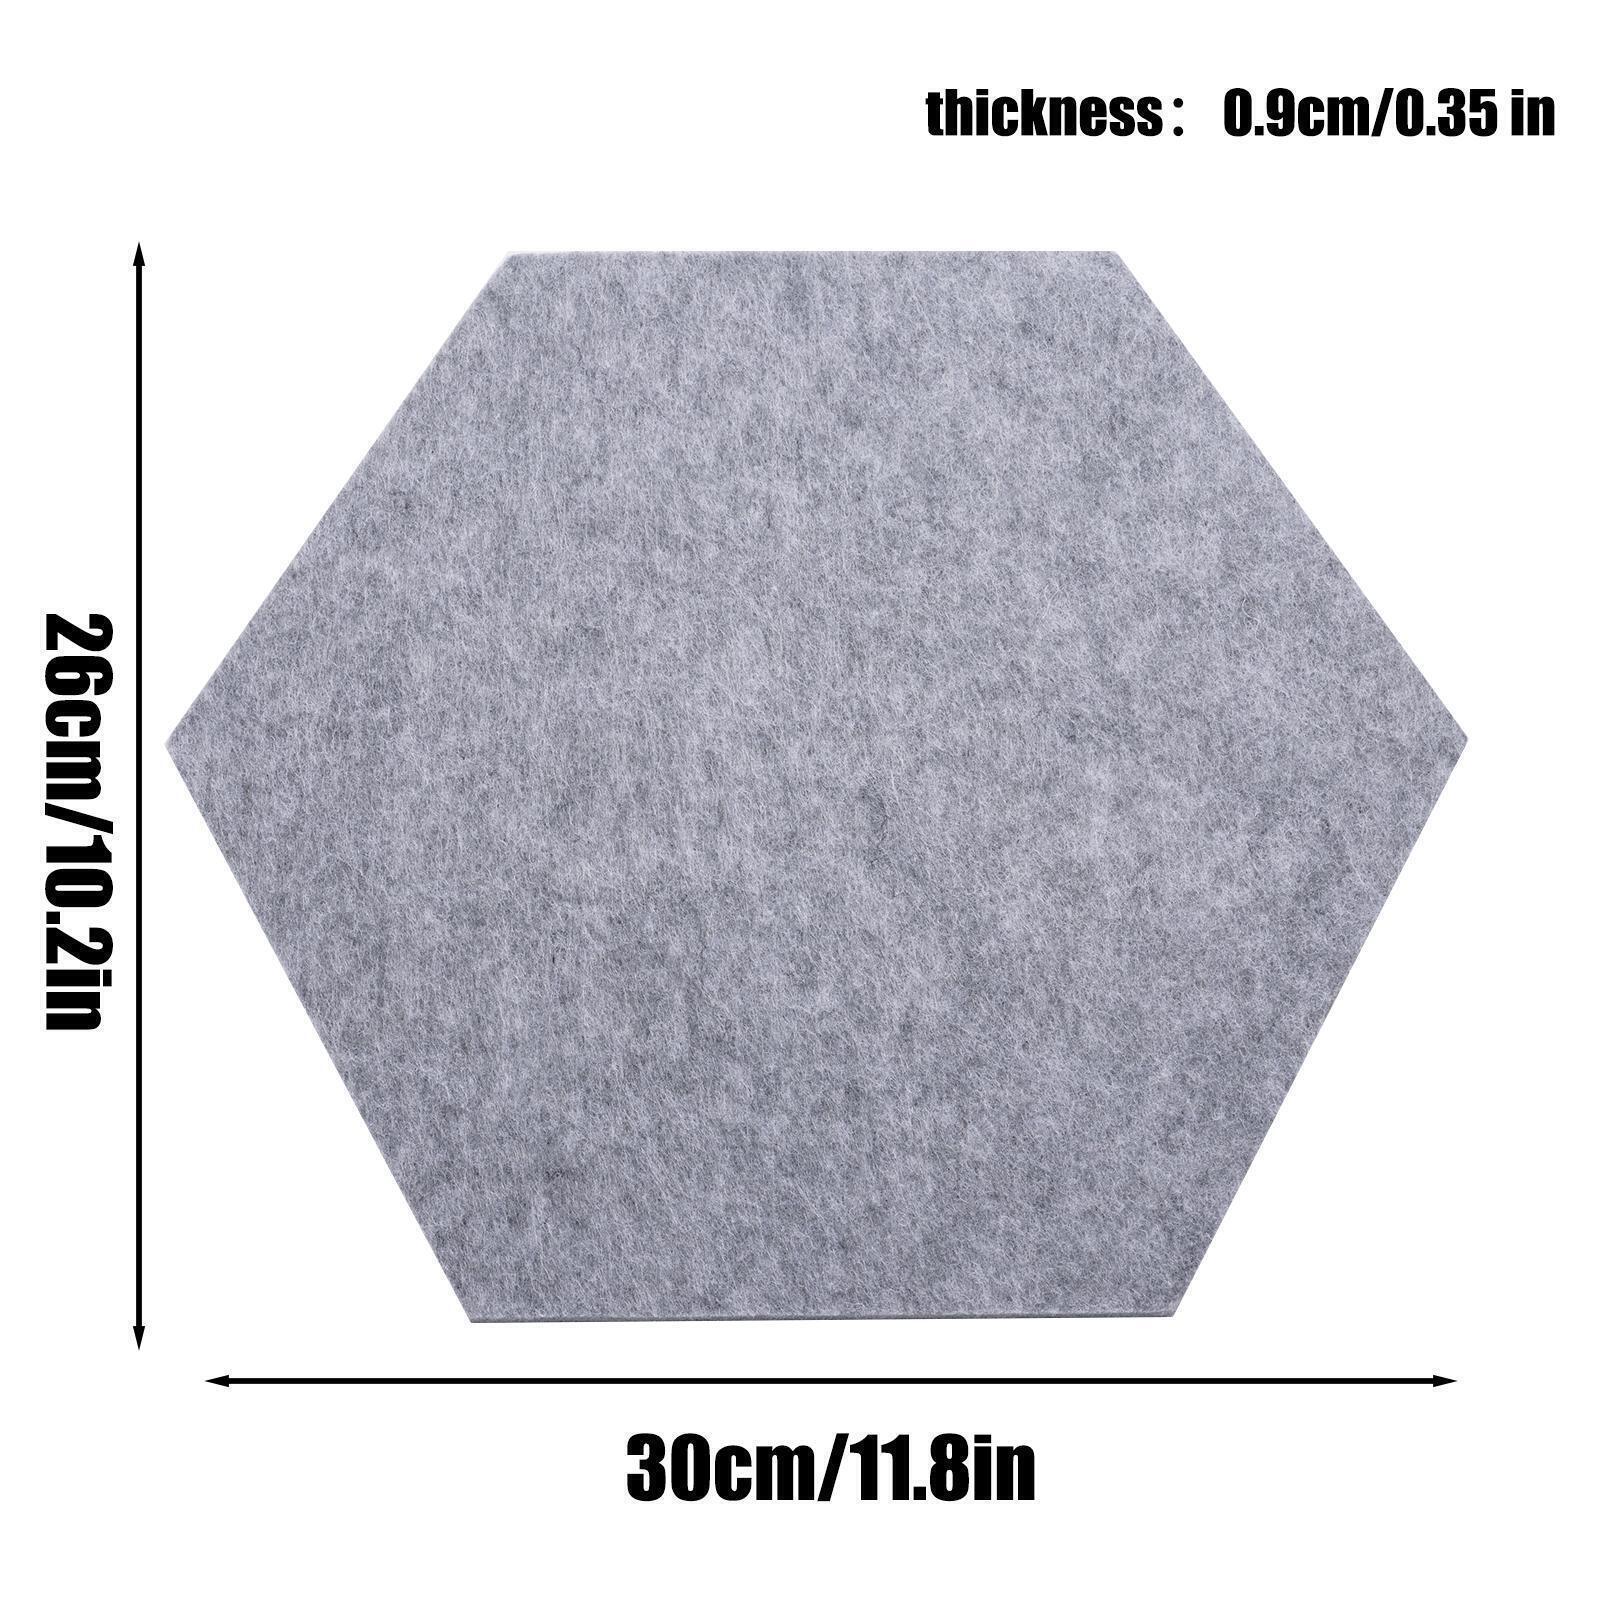 36PCS Hexagon Acoustic Foam Panels Sound Absorbing Wall Proof Noises Tiles I2M9 - Office Catch